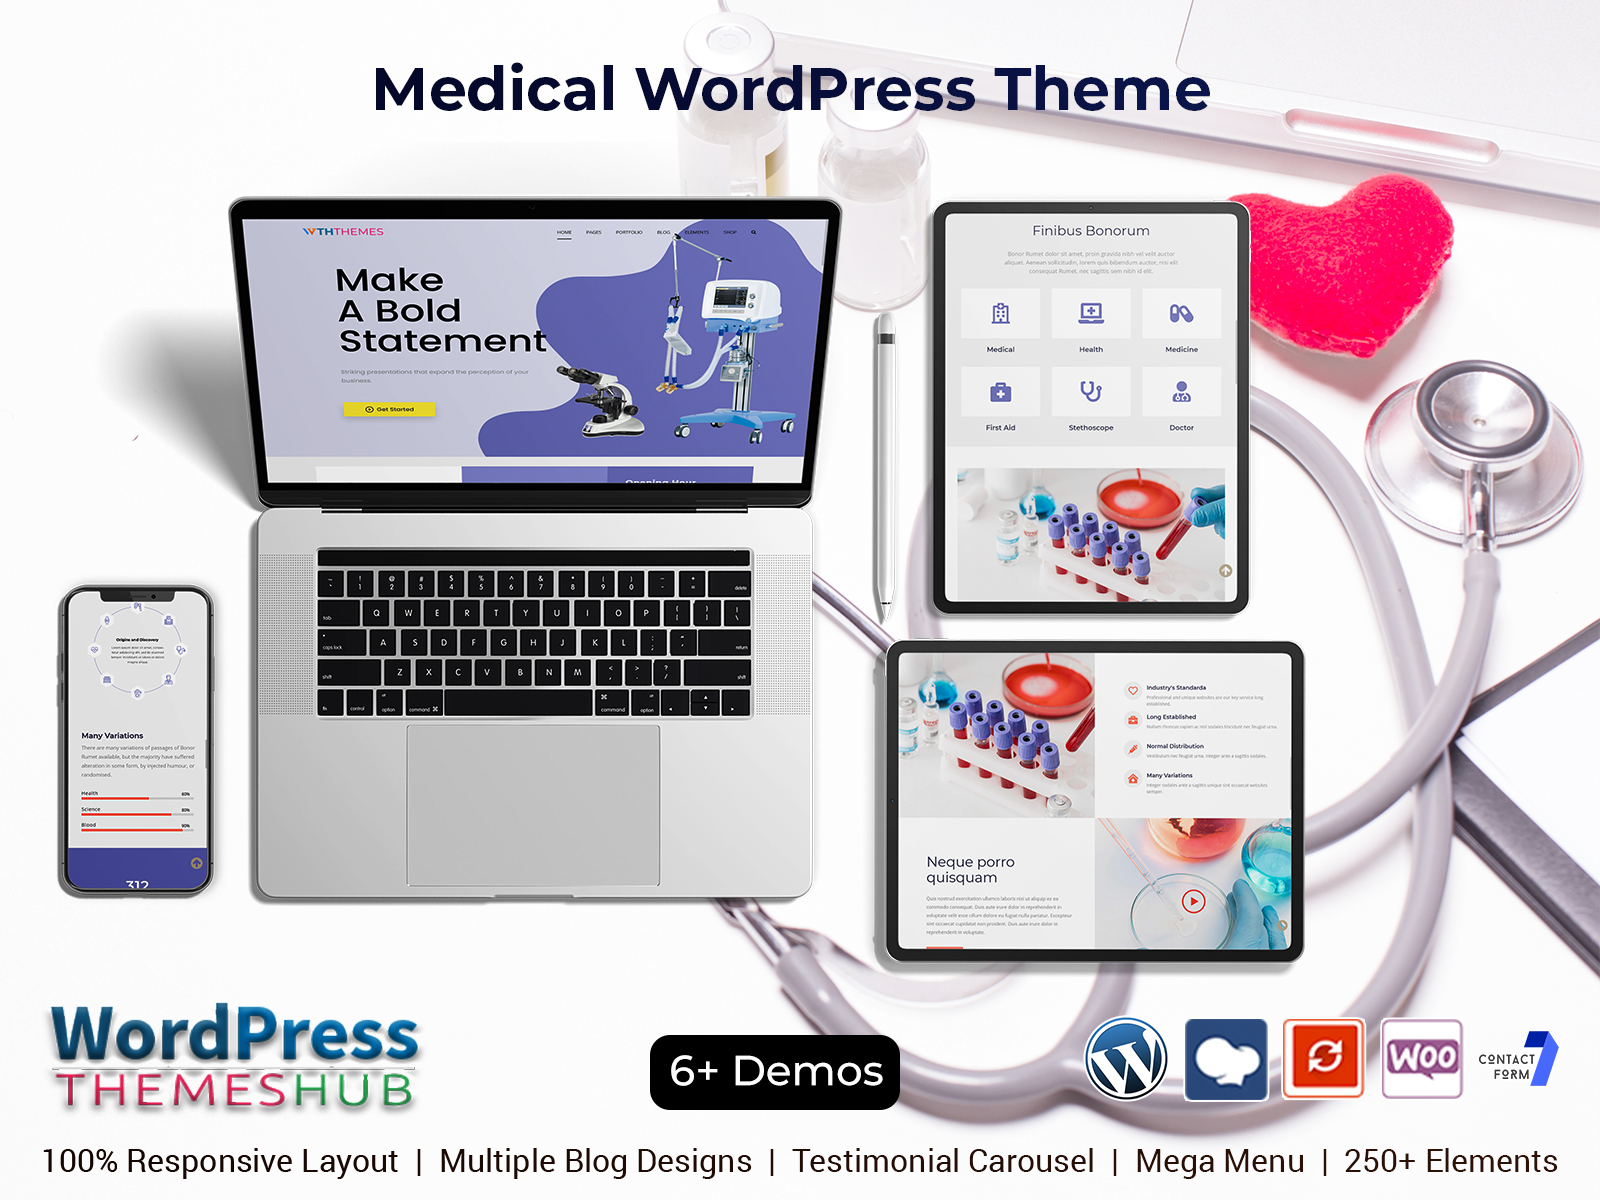 Medical WordPress Theme For Health Care WordPress Website